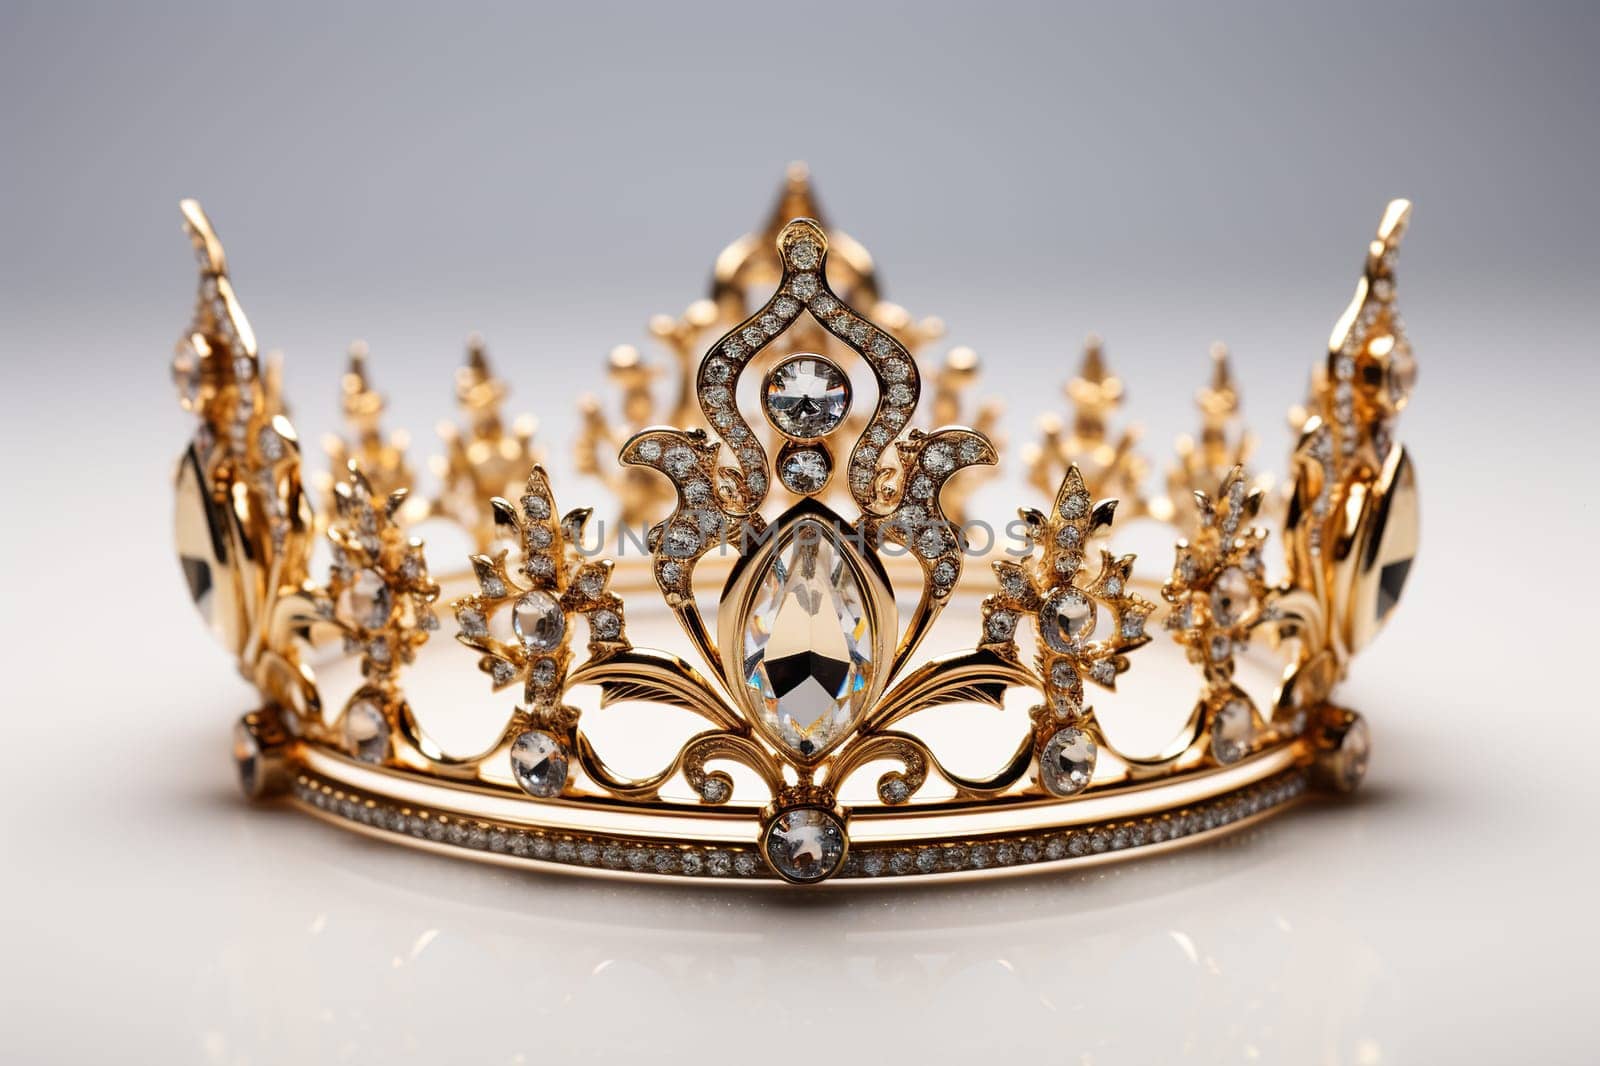 Elegant golden crown with precious stones on a white background.